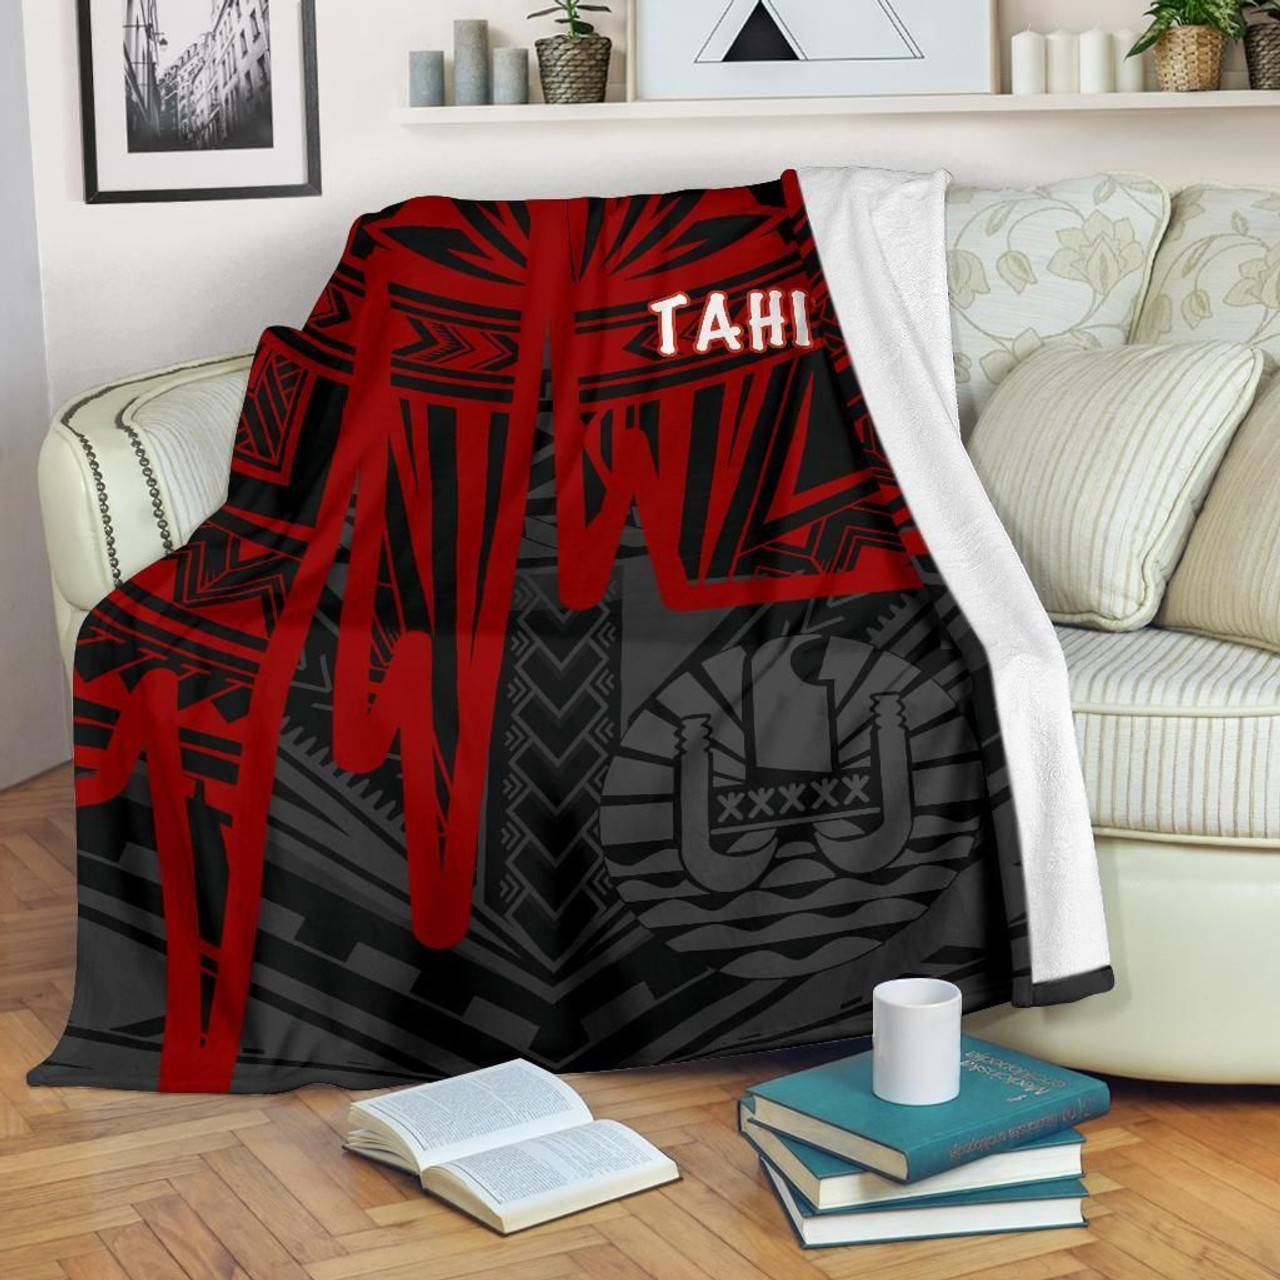 Tahiti Premium Blanket - Tahiti Seal In Heartbeat Patterns Style (Red) 3